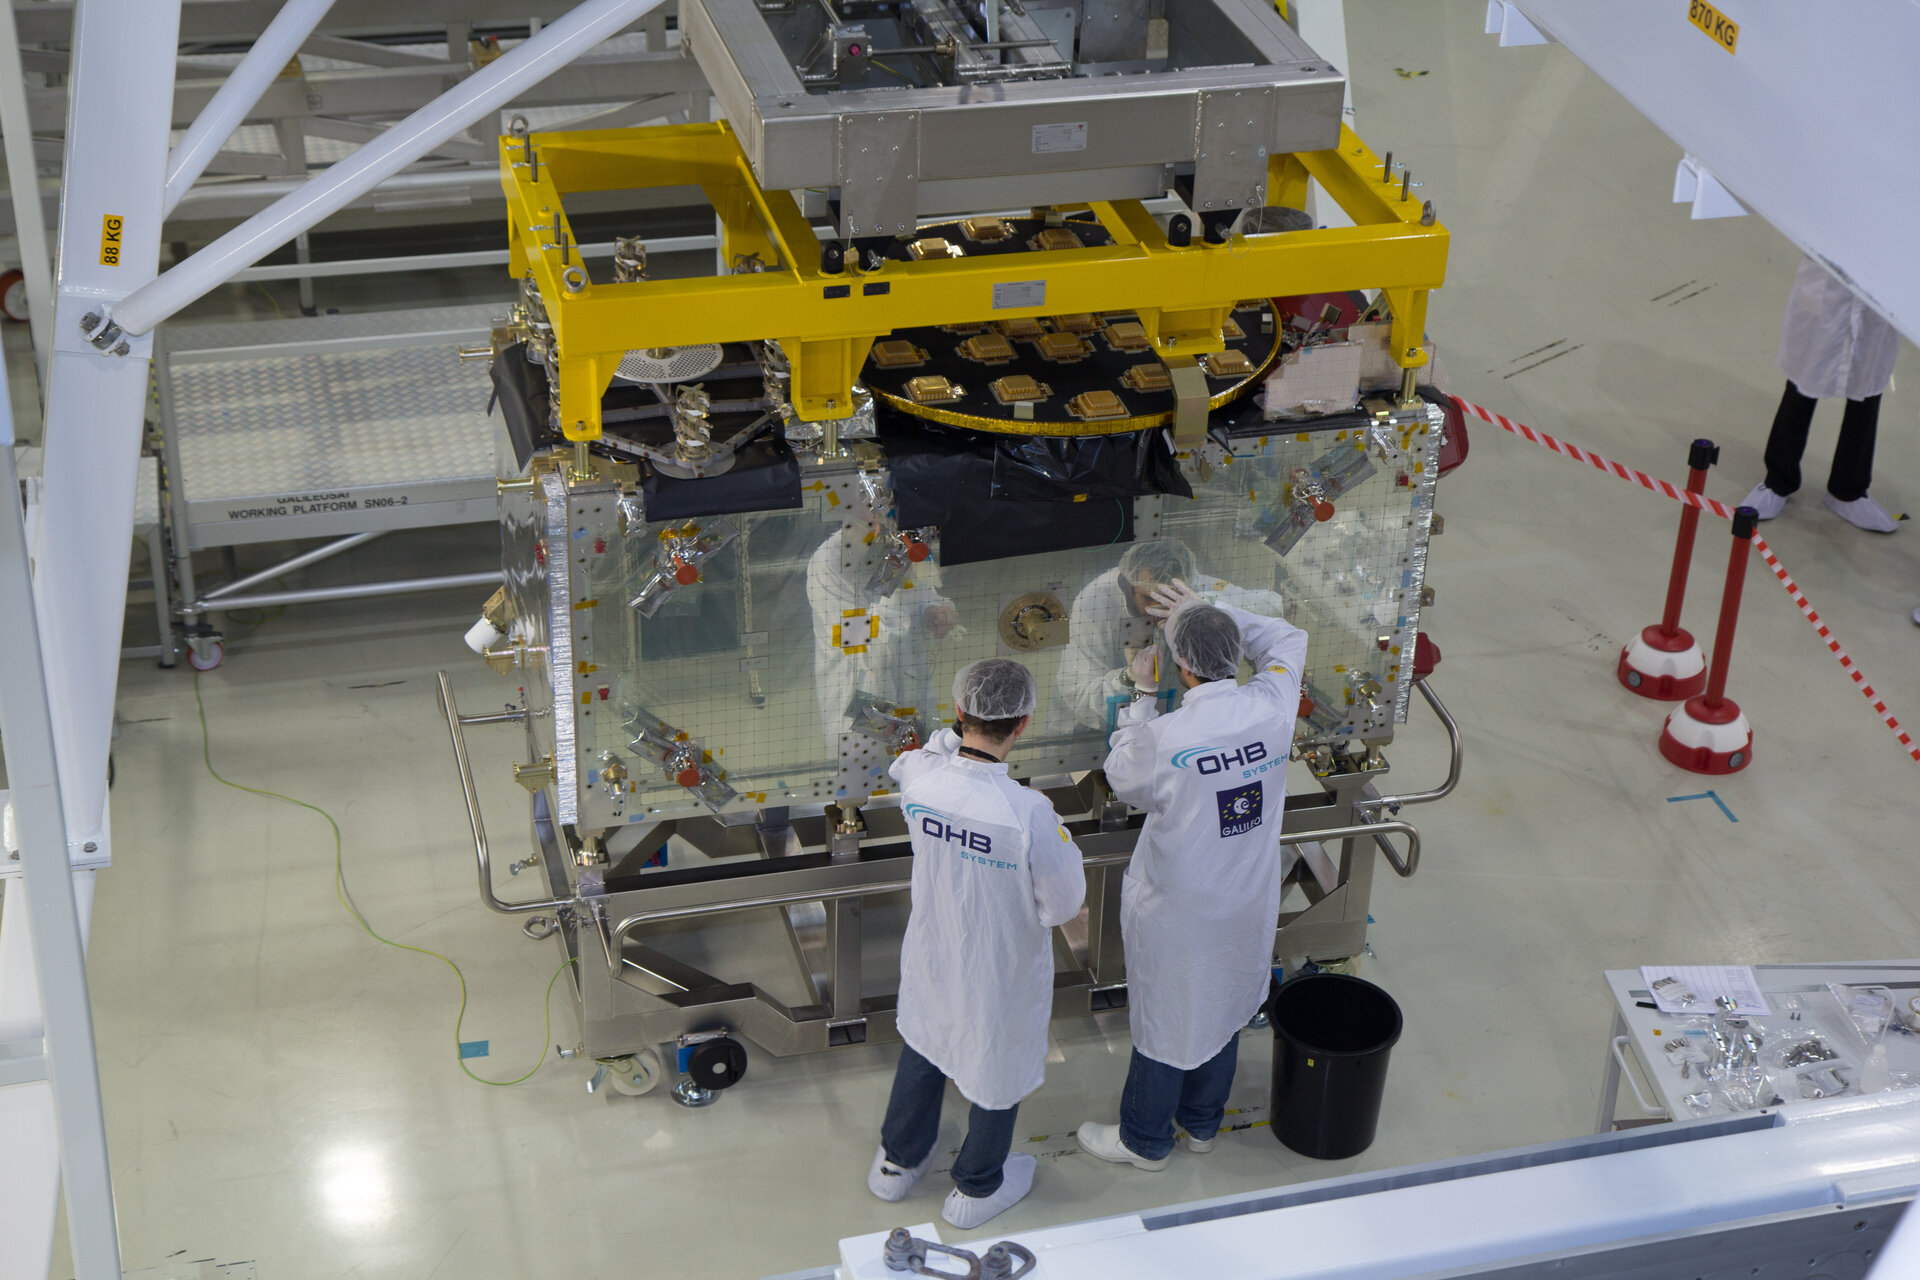 Phone-booth-sized Galileo FOC satellite